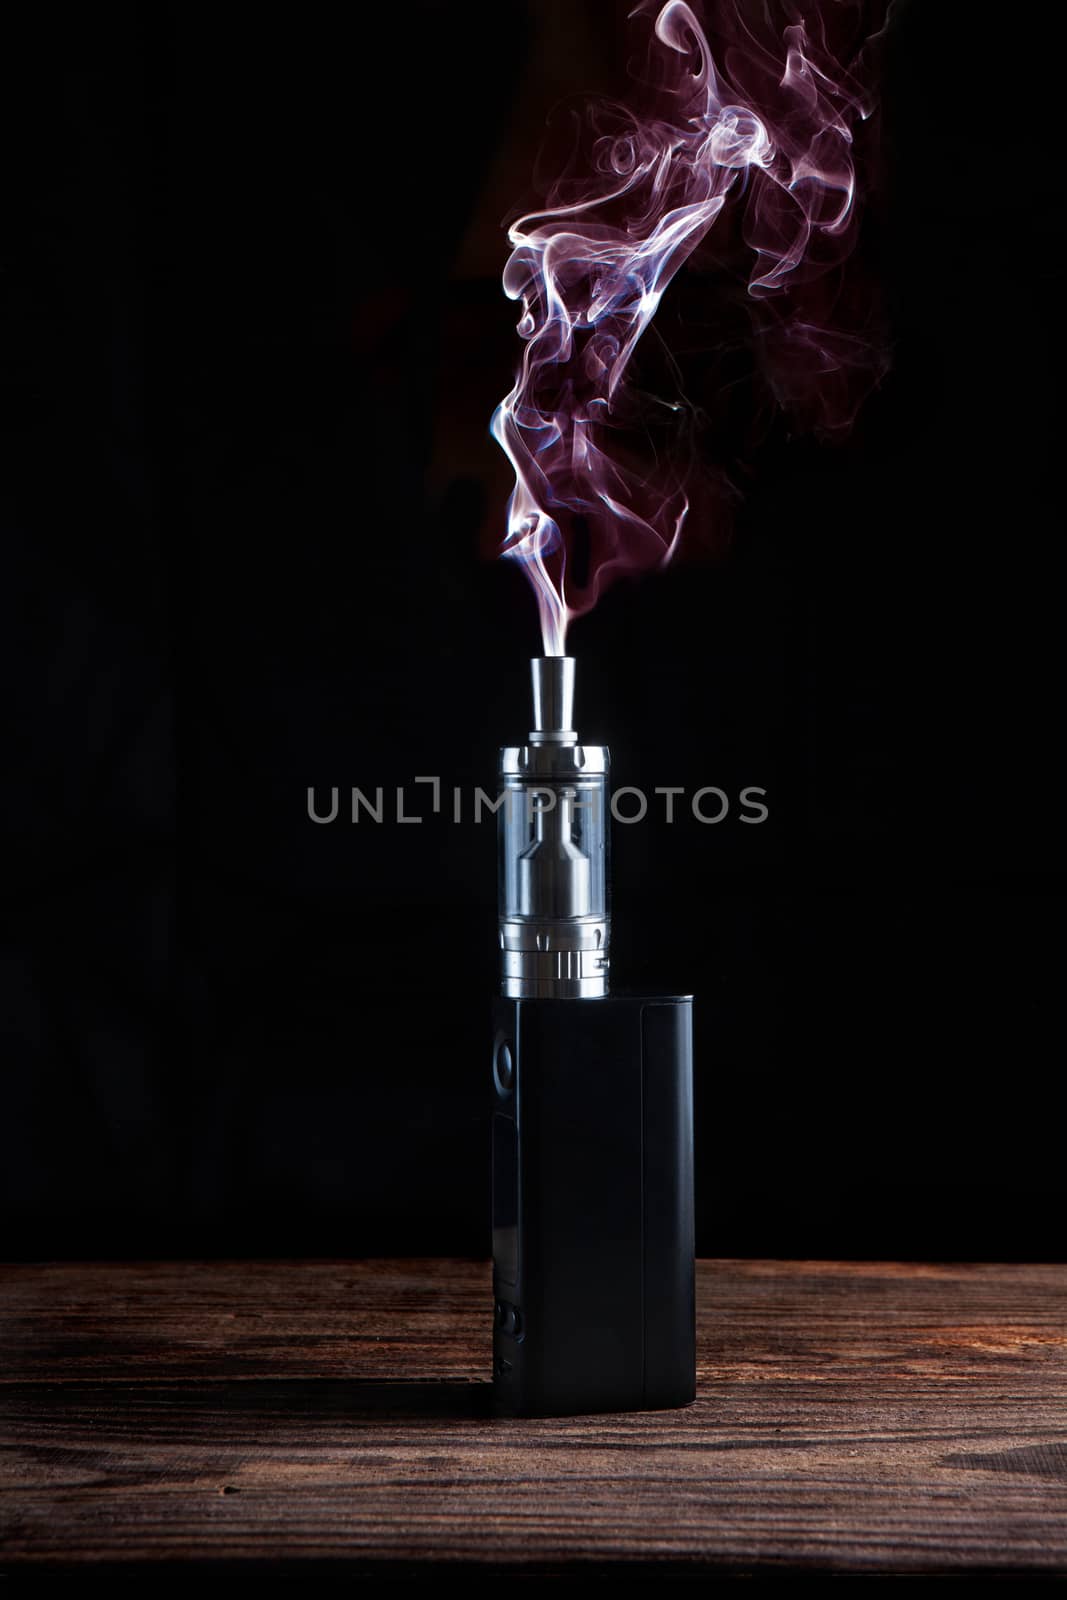 electronic cigarette over a dark background by fotoru